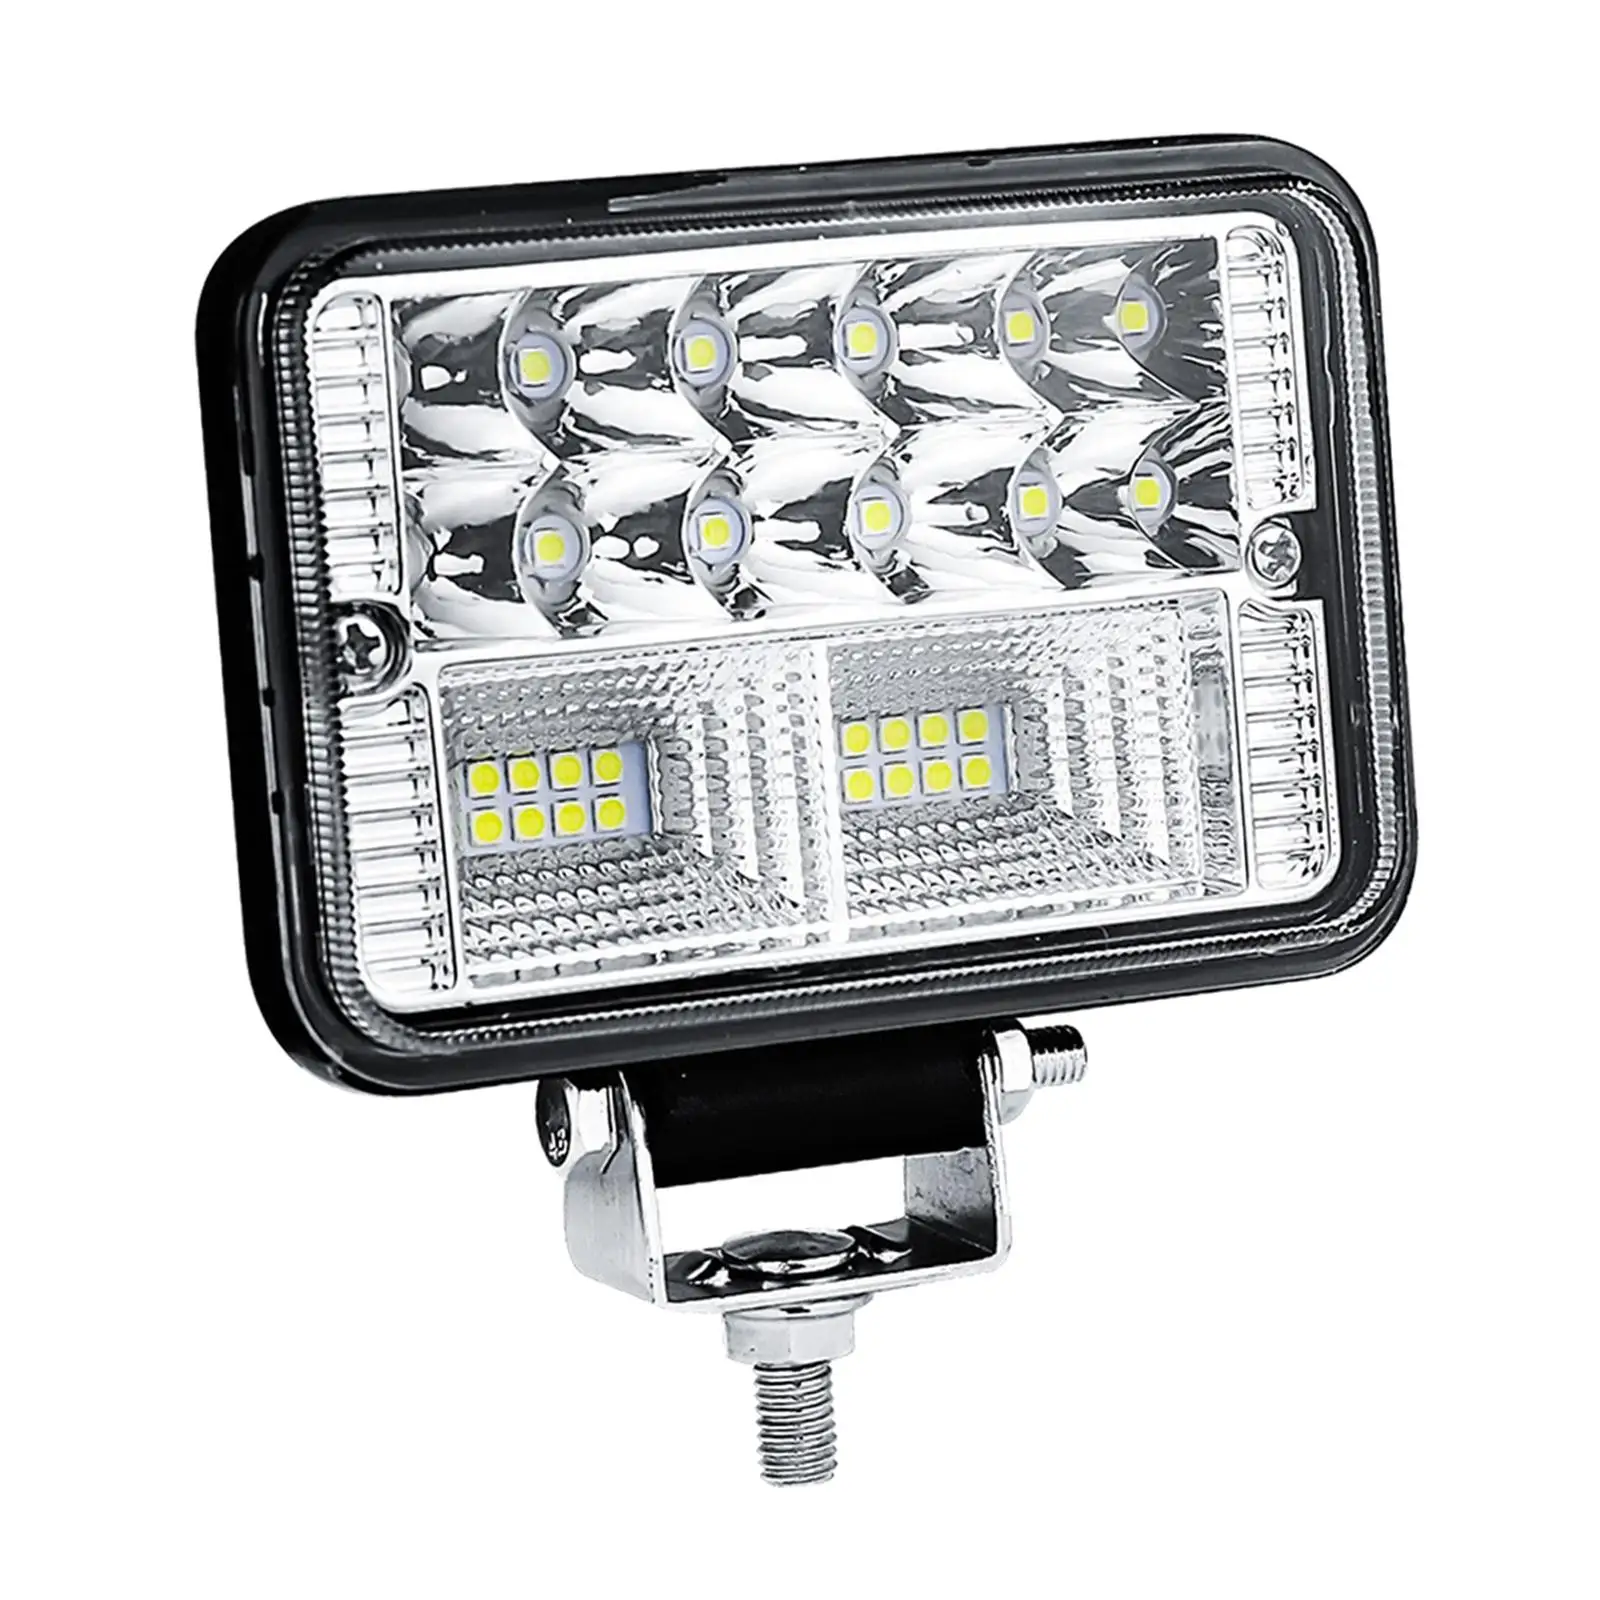 Truck LED Spotlight 78W 6000K Work Light 6000LM IP67 Waterproof Light Bar for SUV Boat Cars